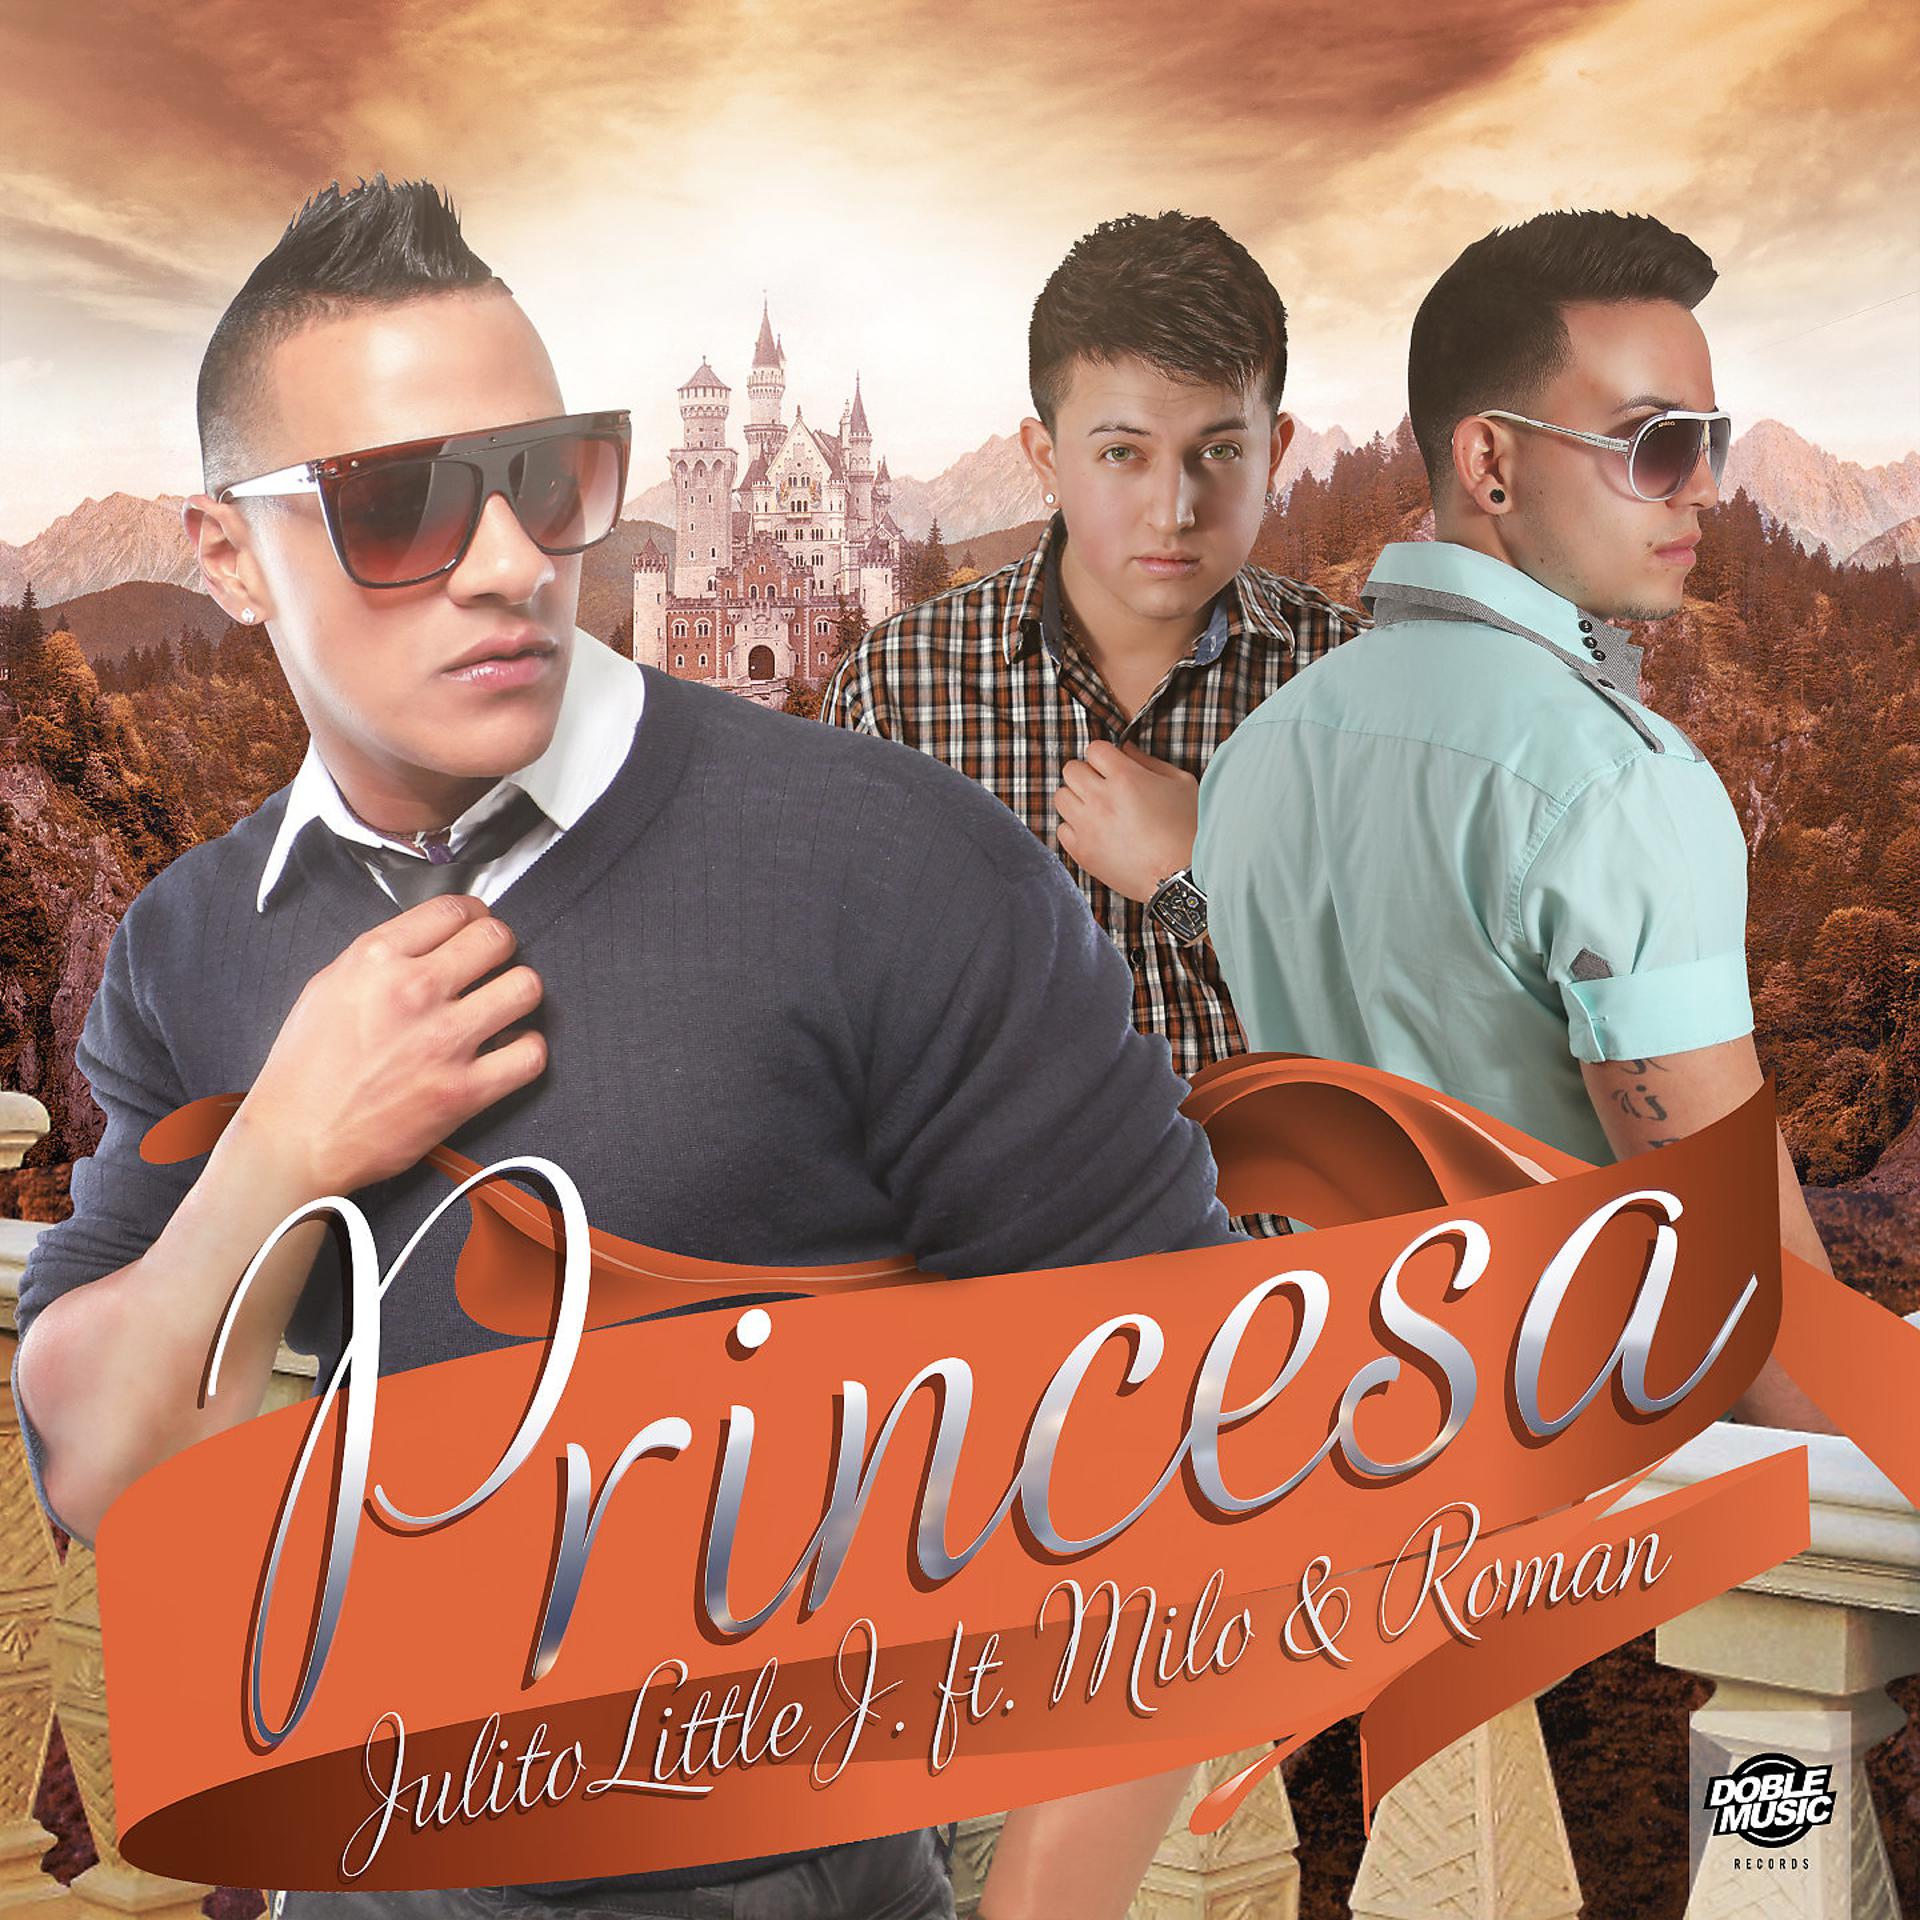 Постер альбома Mi Princesa